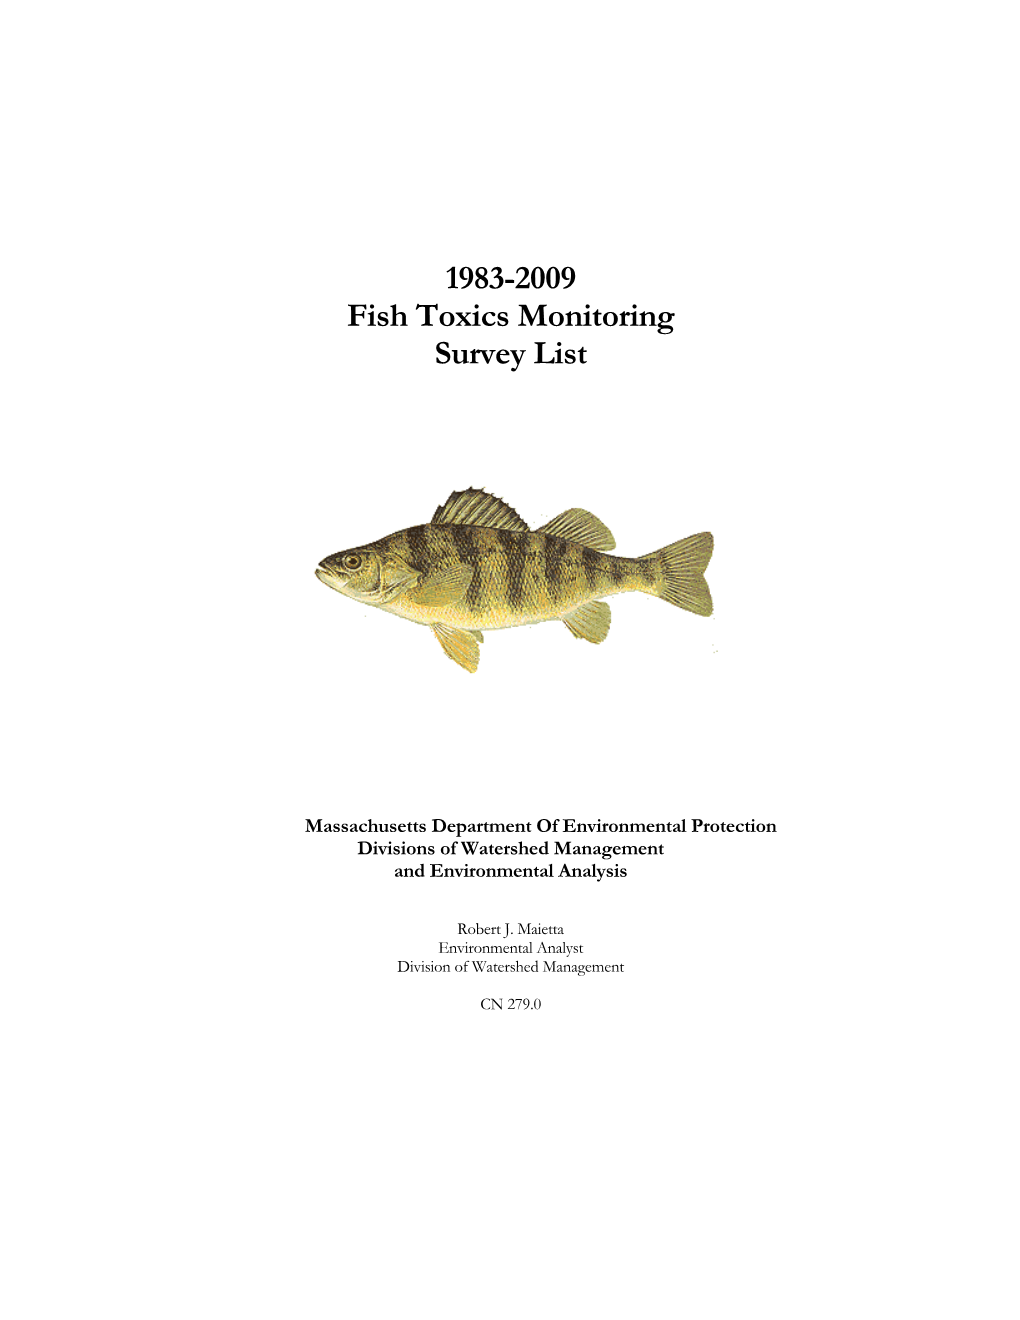 1983-2009 Fish Toxics Monitoring Survey List